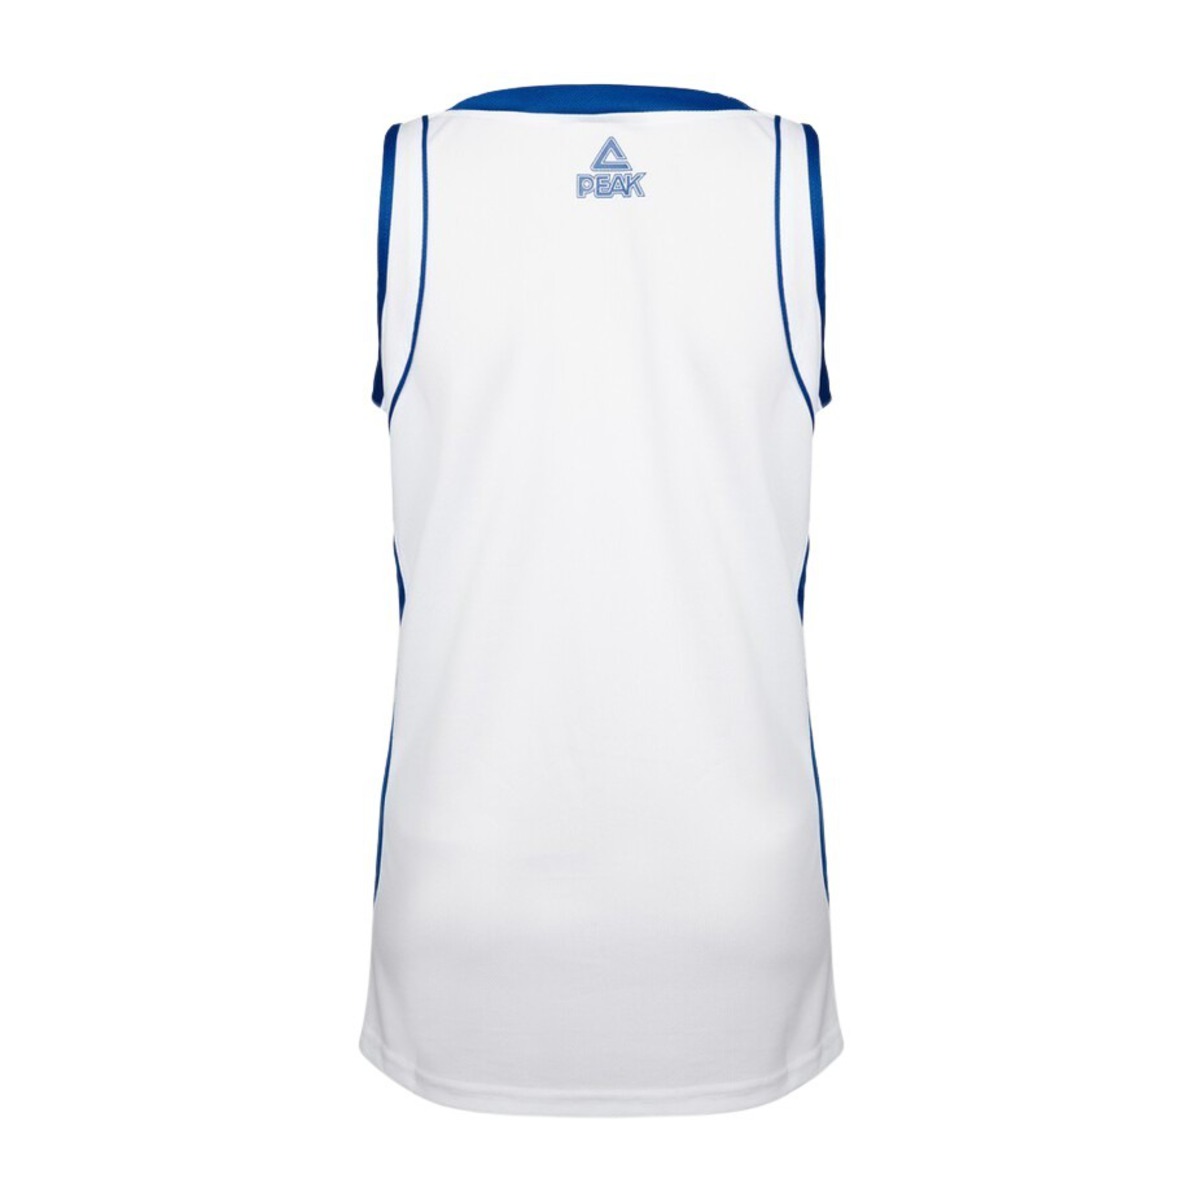 Camiseta De Niña Peak Match - Blanco/Azul  MKP